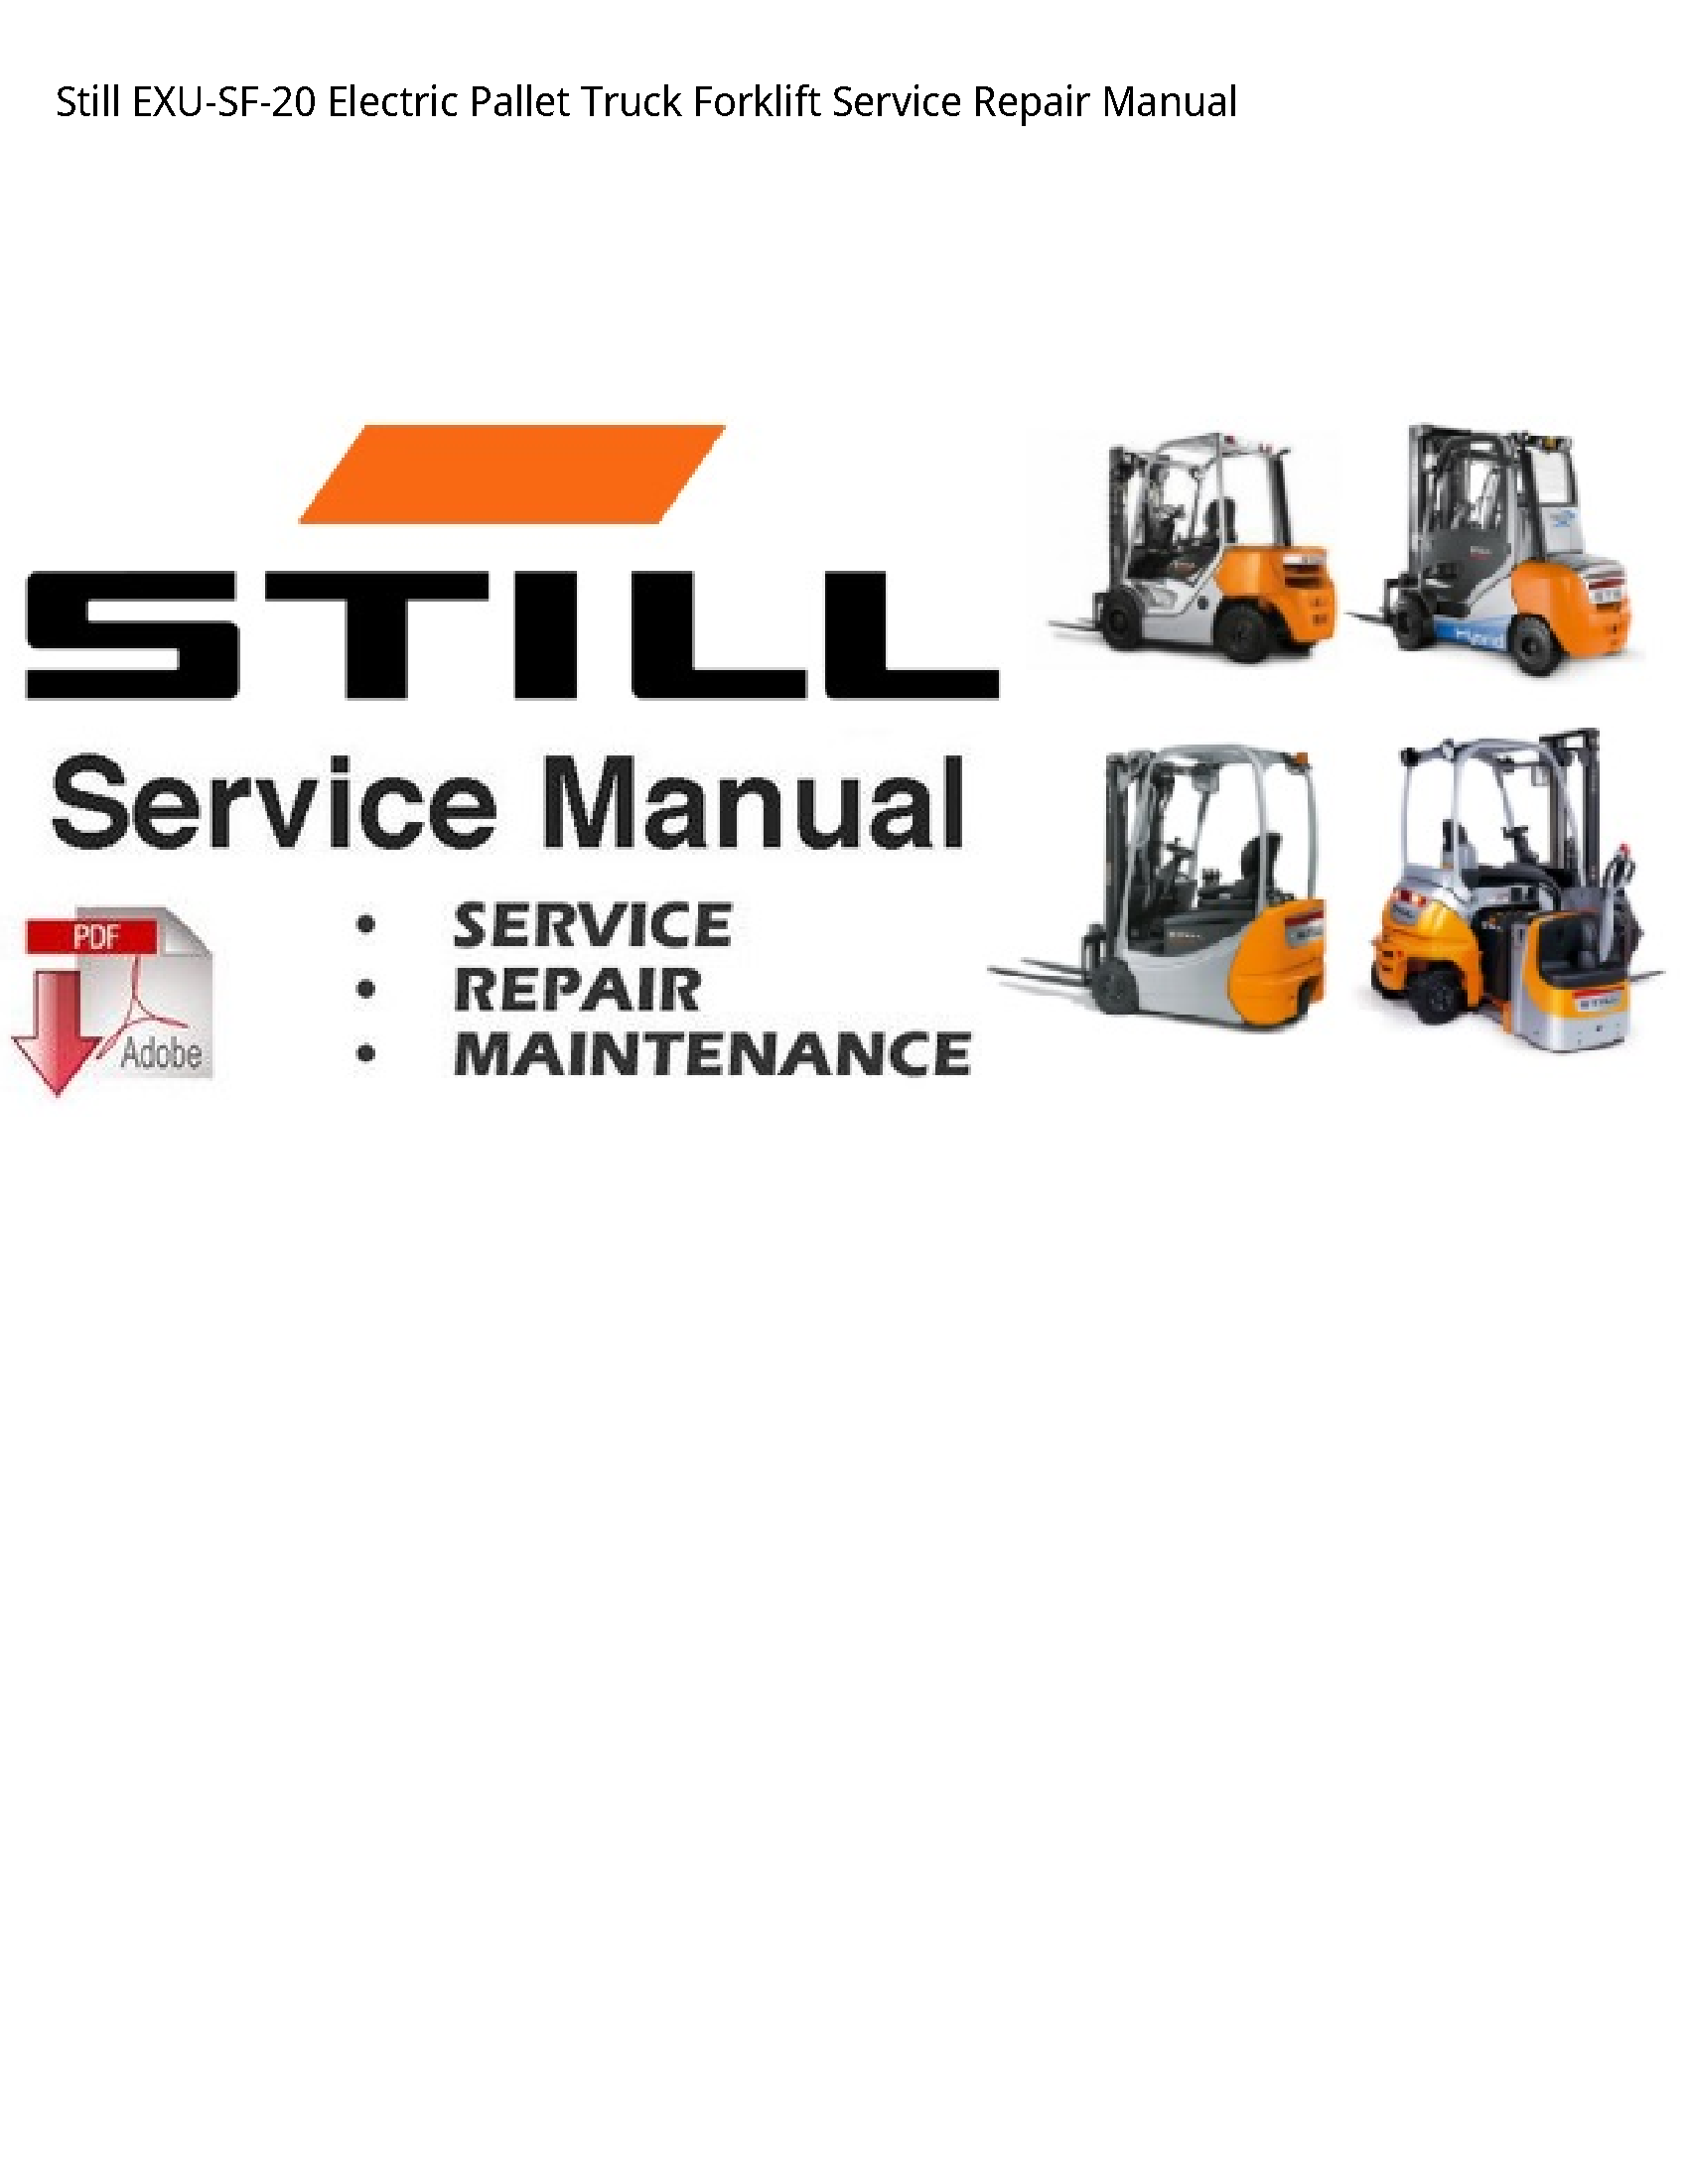 Still EXU-SF-20 Electric Pallet Truck Forklift manual